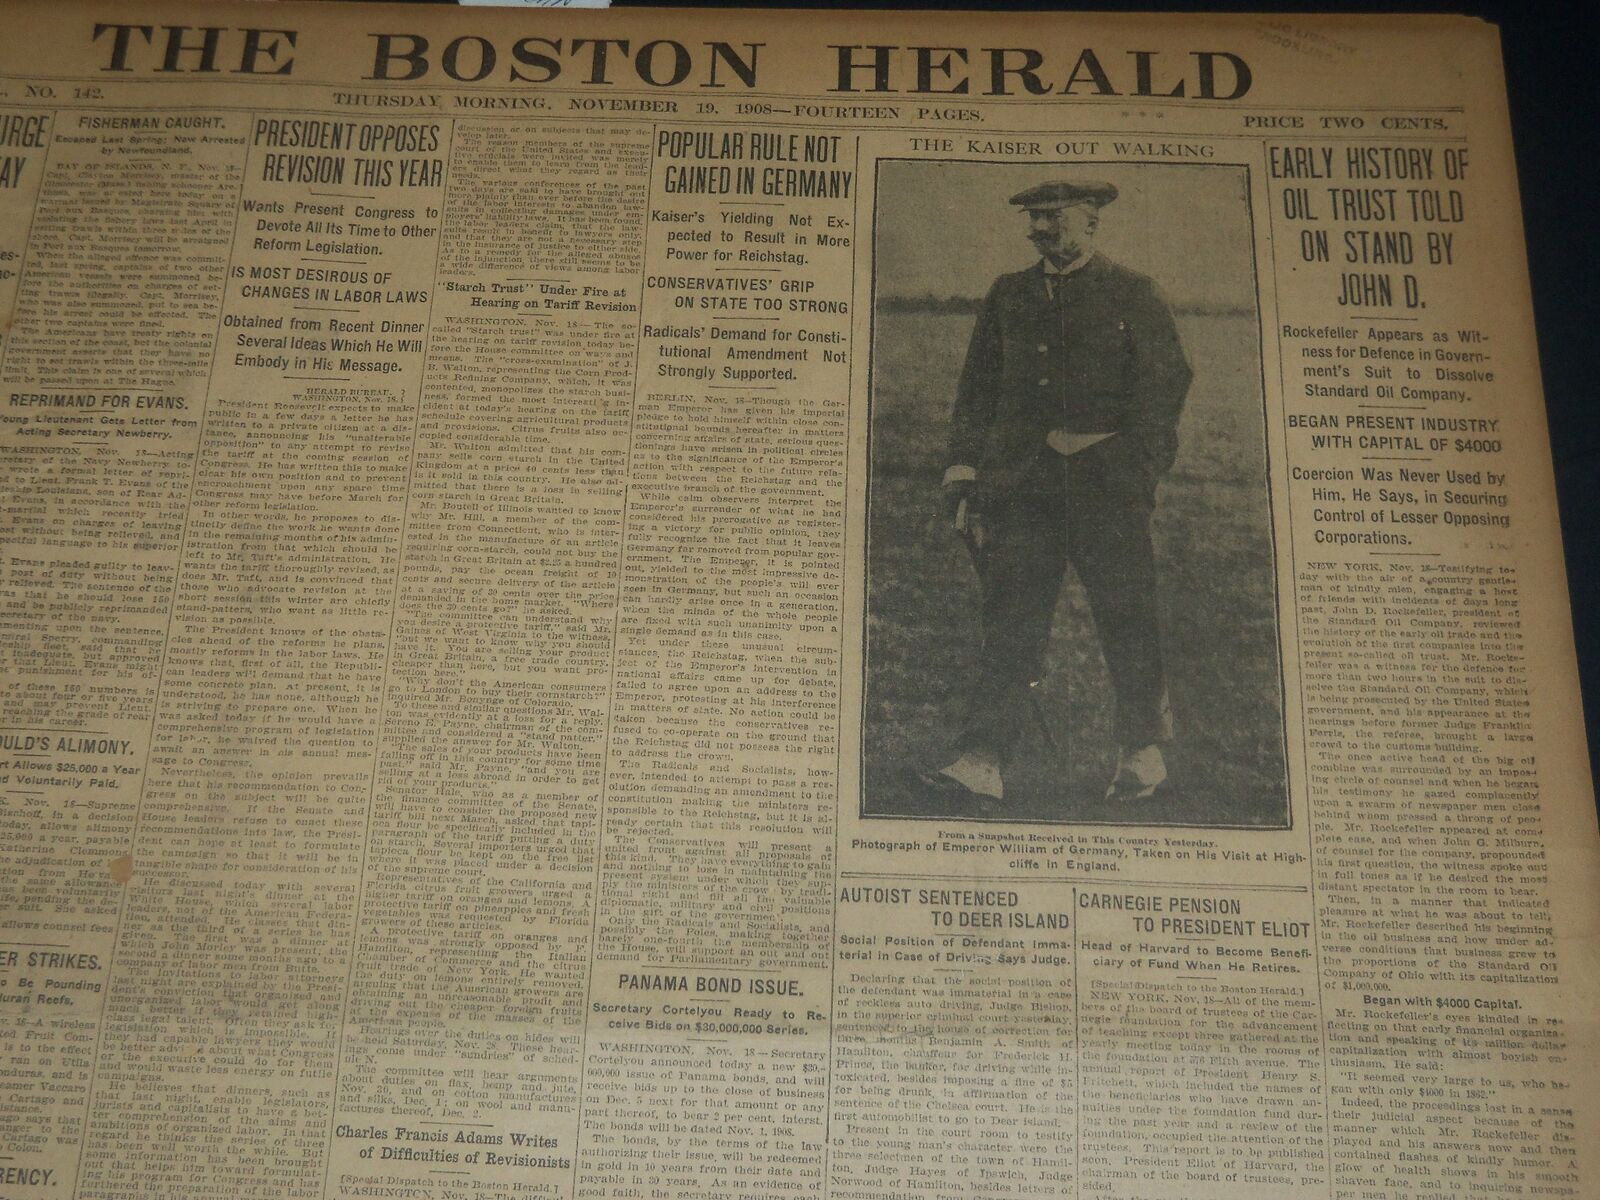 1908 NOV 19 THE BOSTON HERALD - HISTORY OF OIL TRUST TOLD BY JOHN D. - BH 221